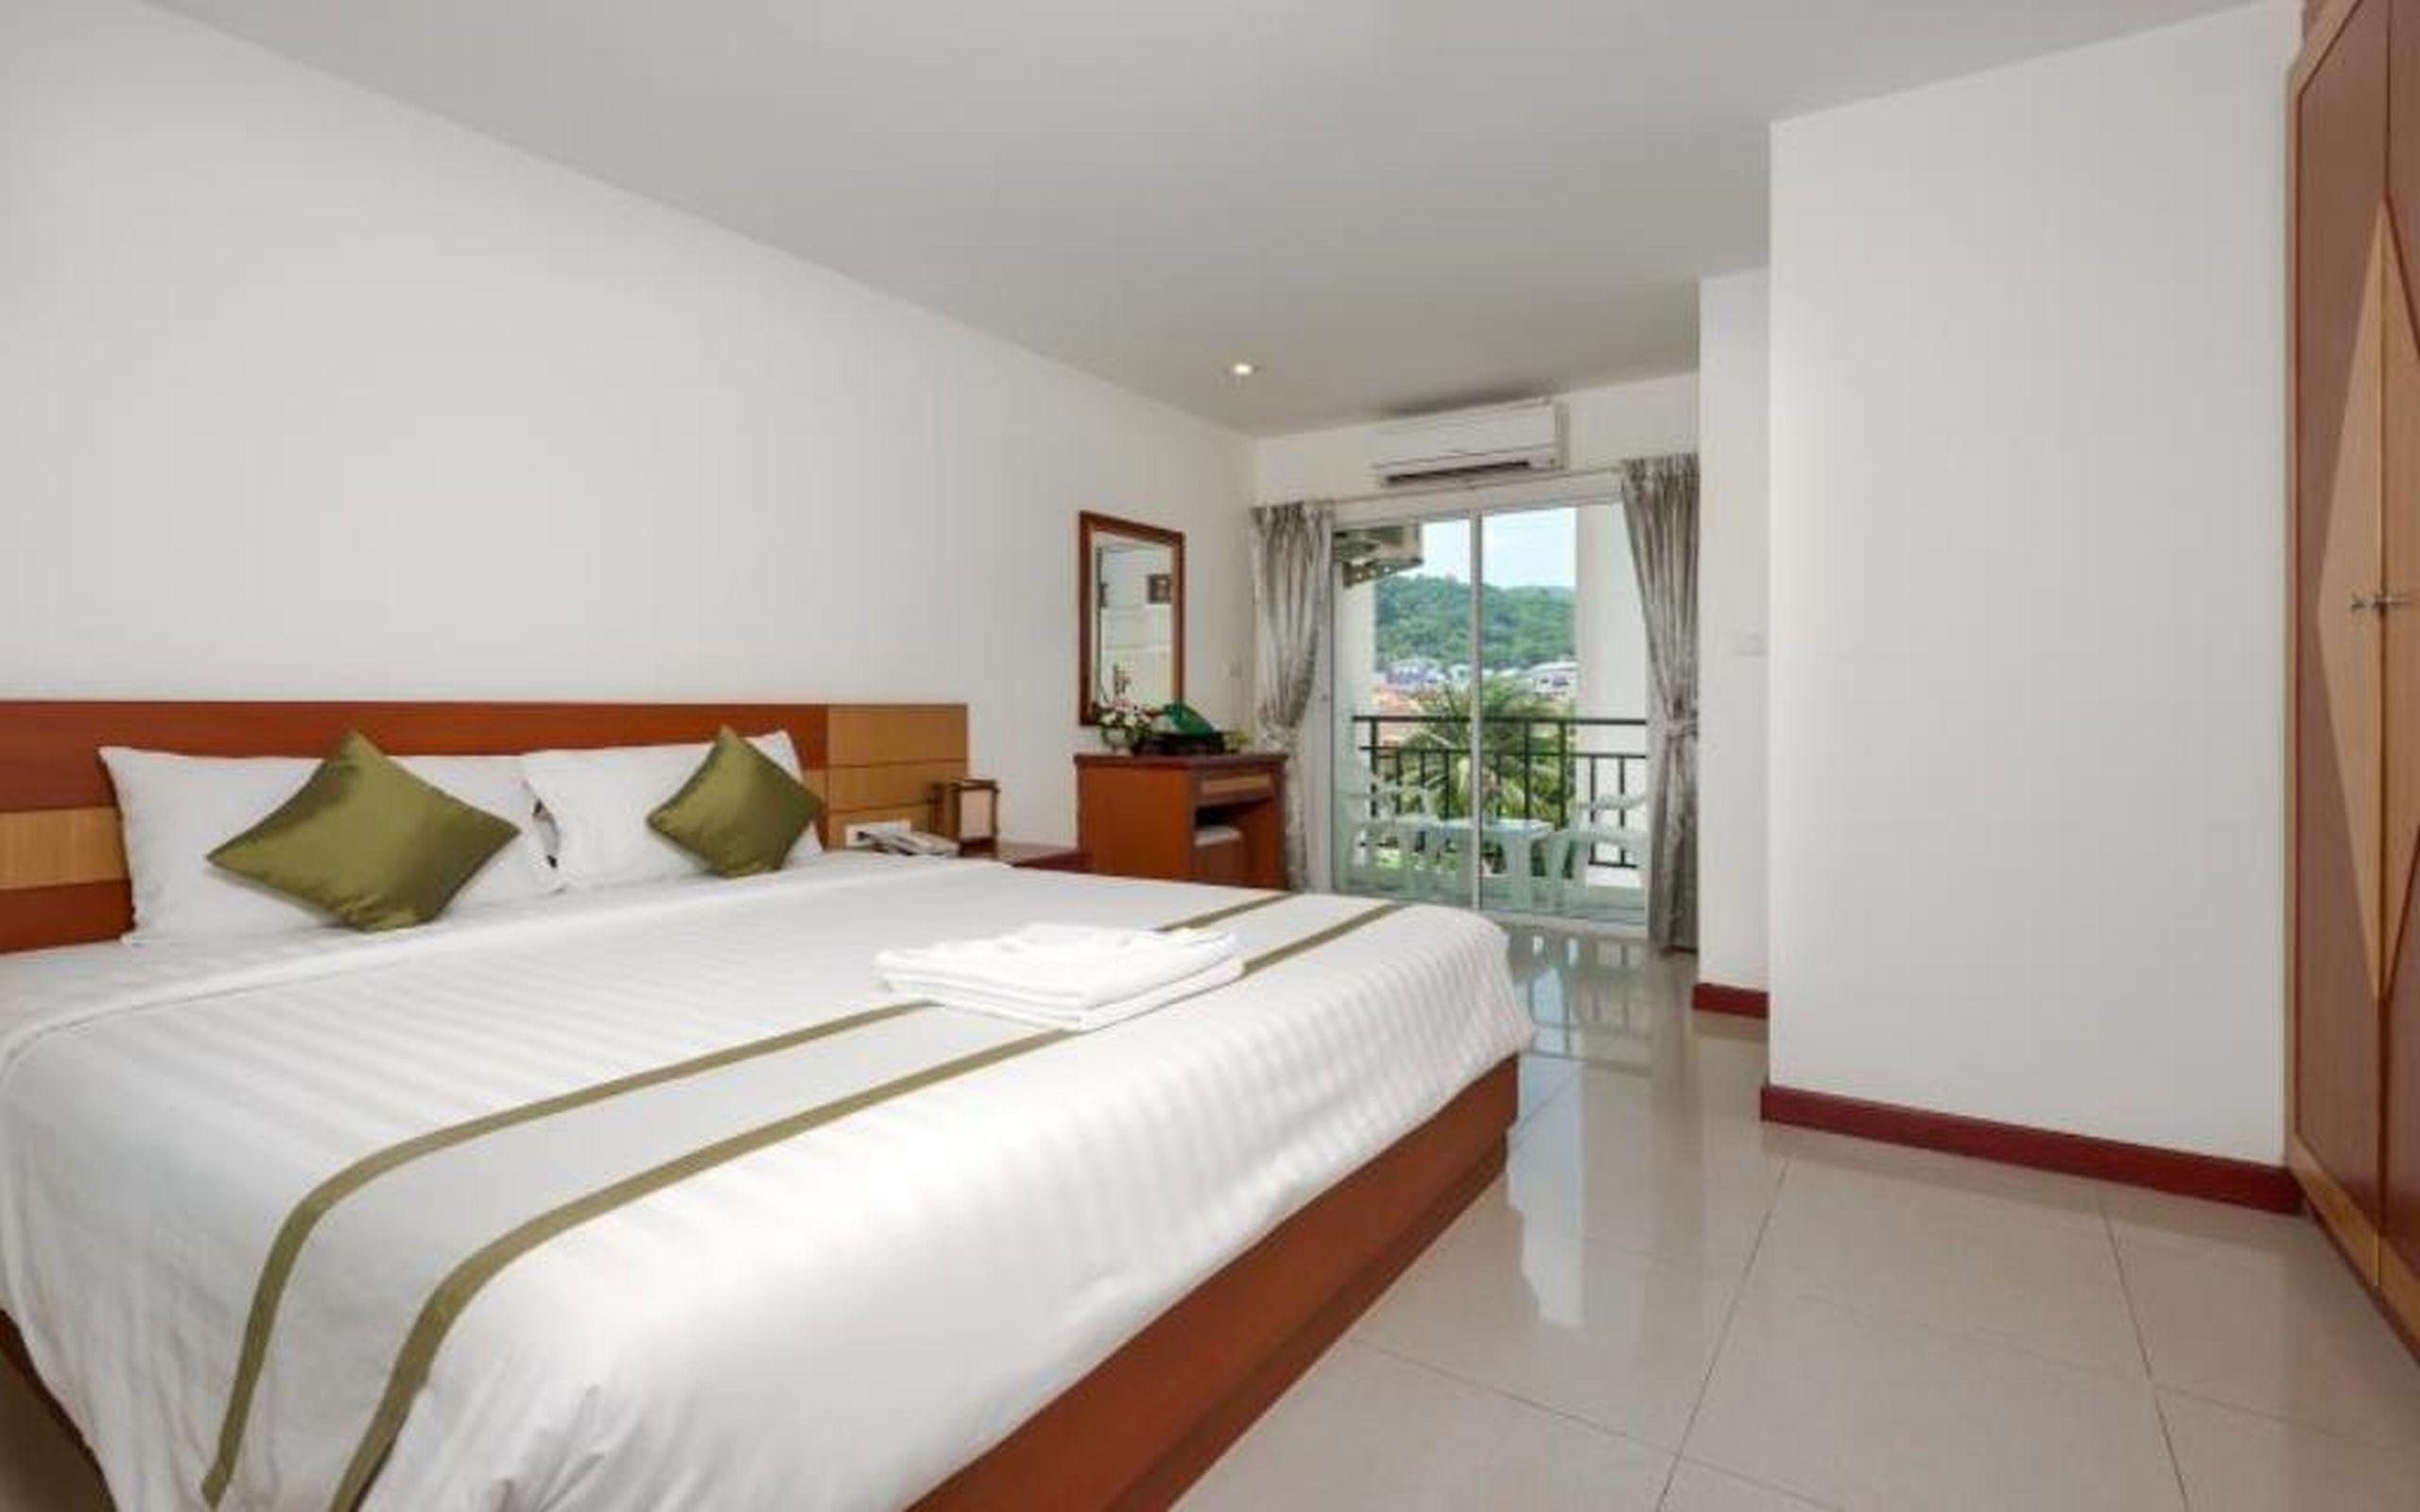 Apk Resort And Spa Phuket Exterior photo